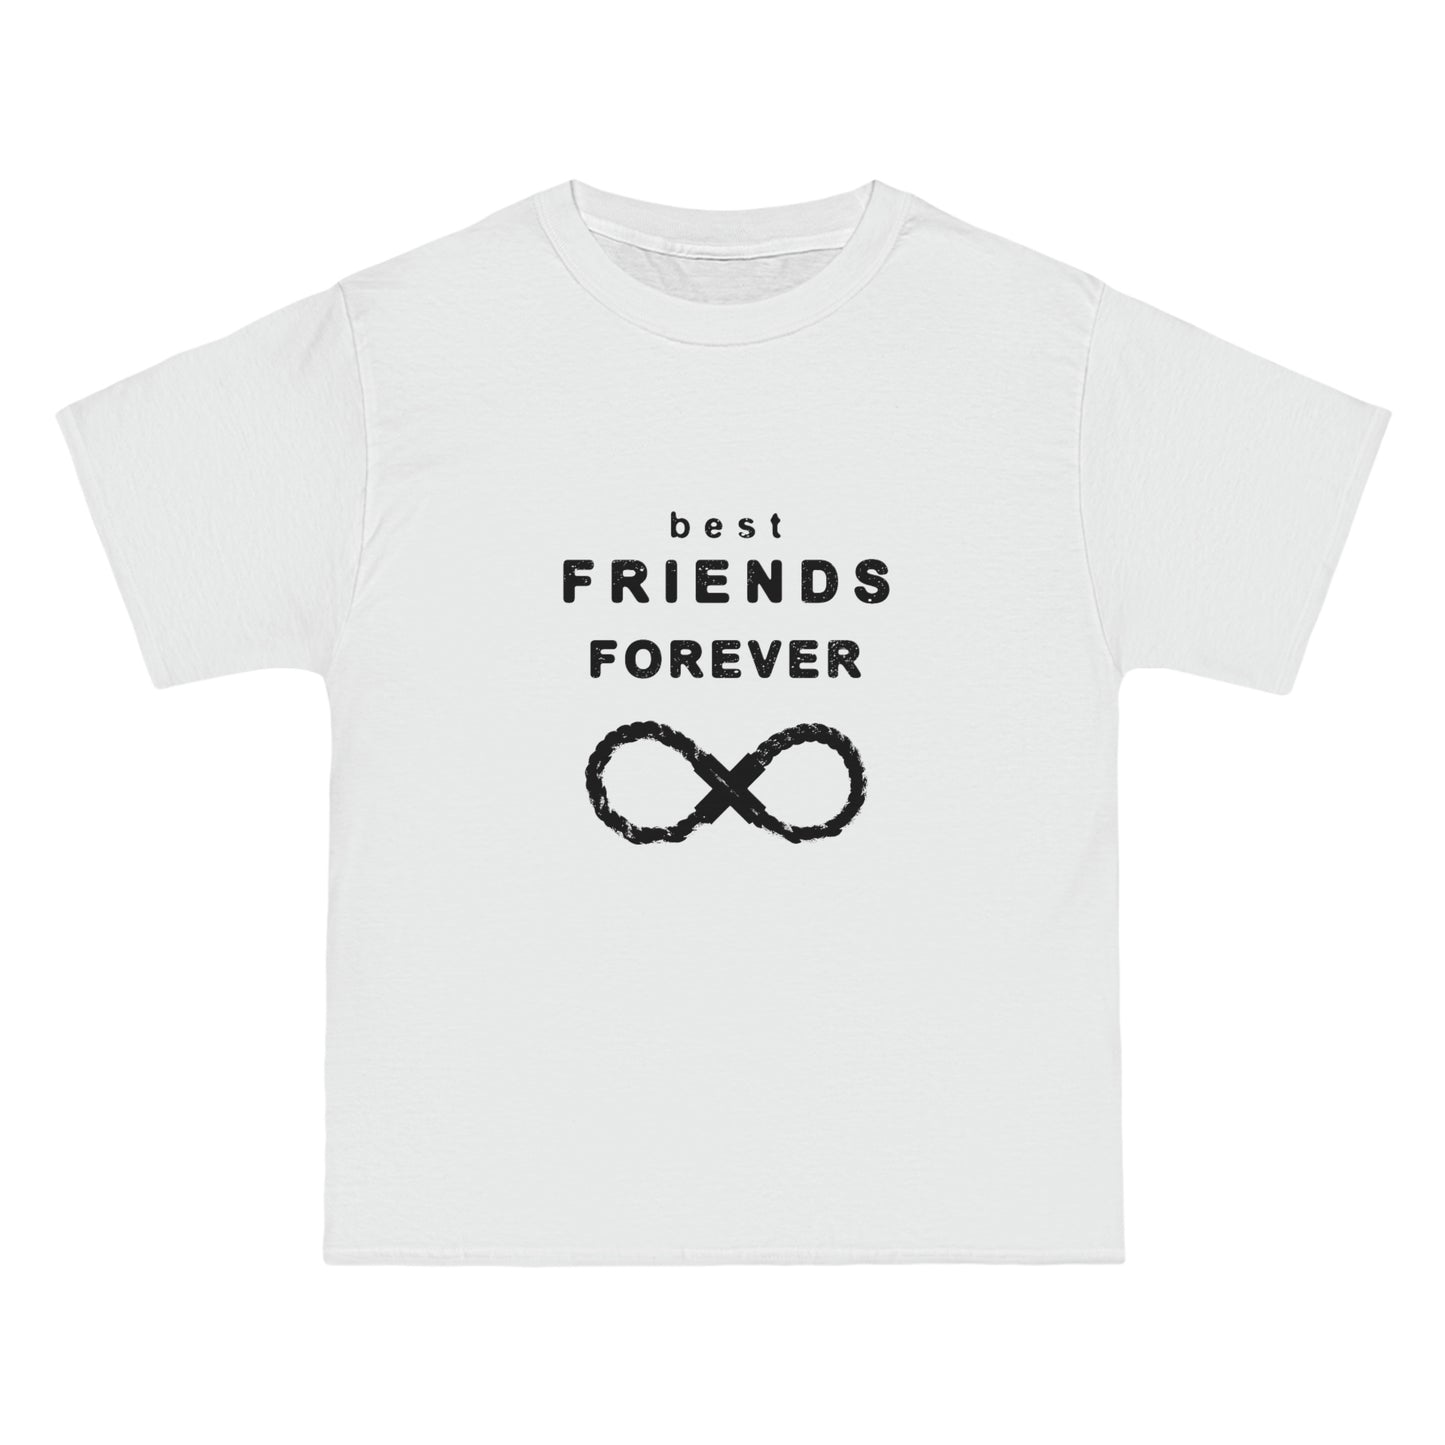 Best Friends Forever Unisex T-Shirt